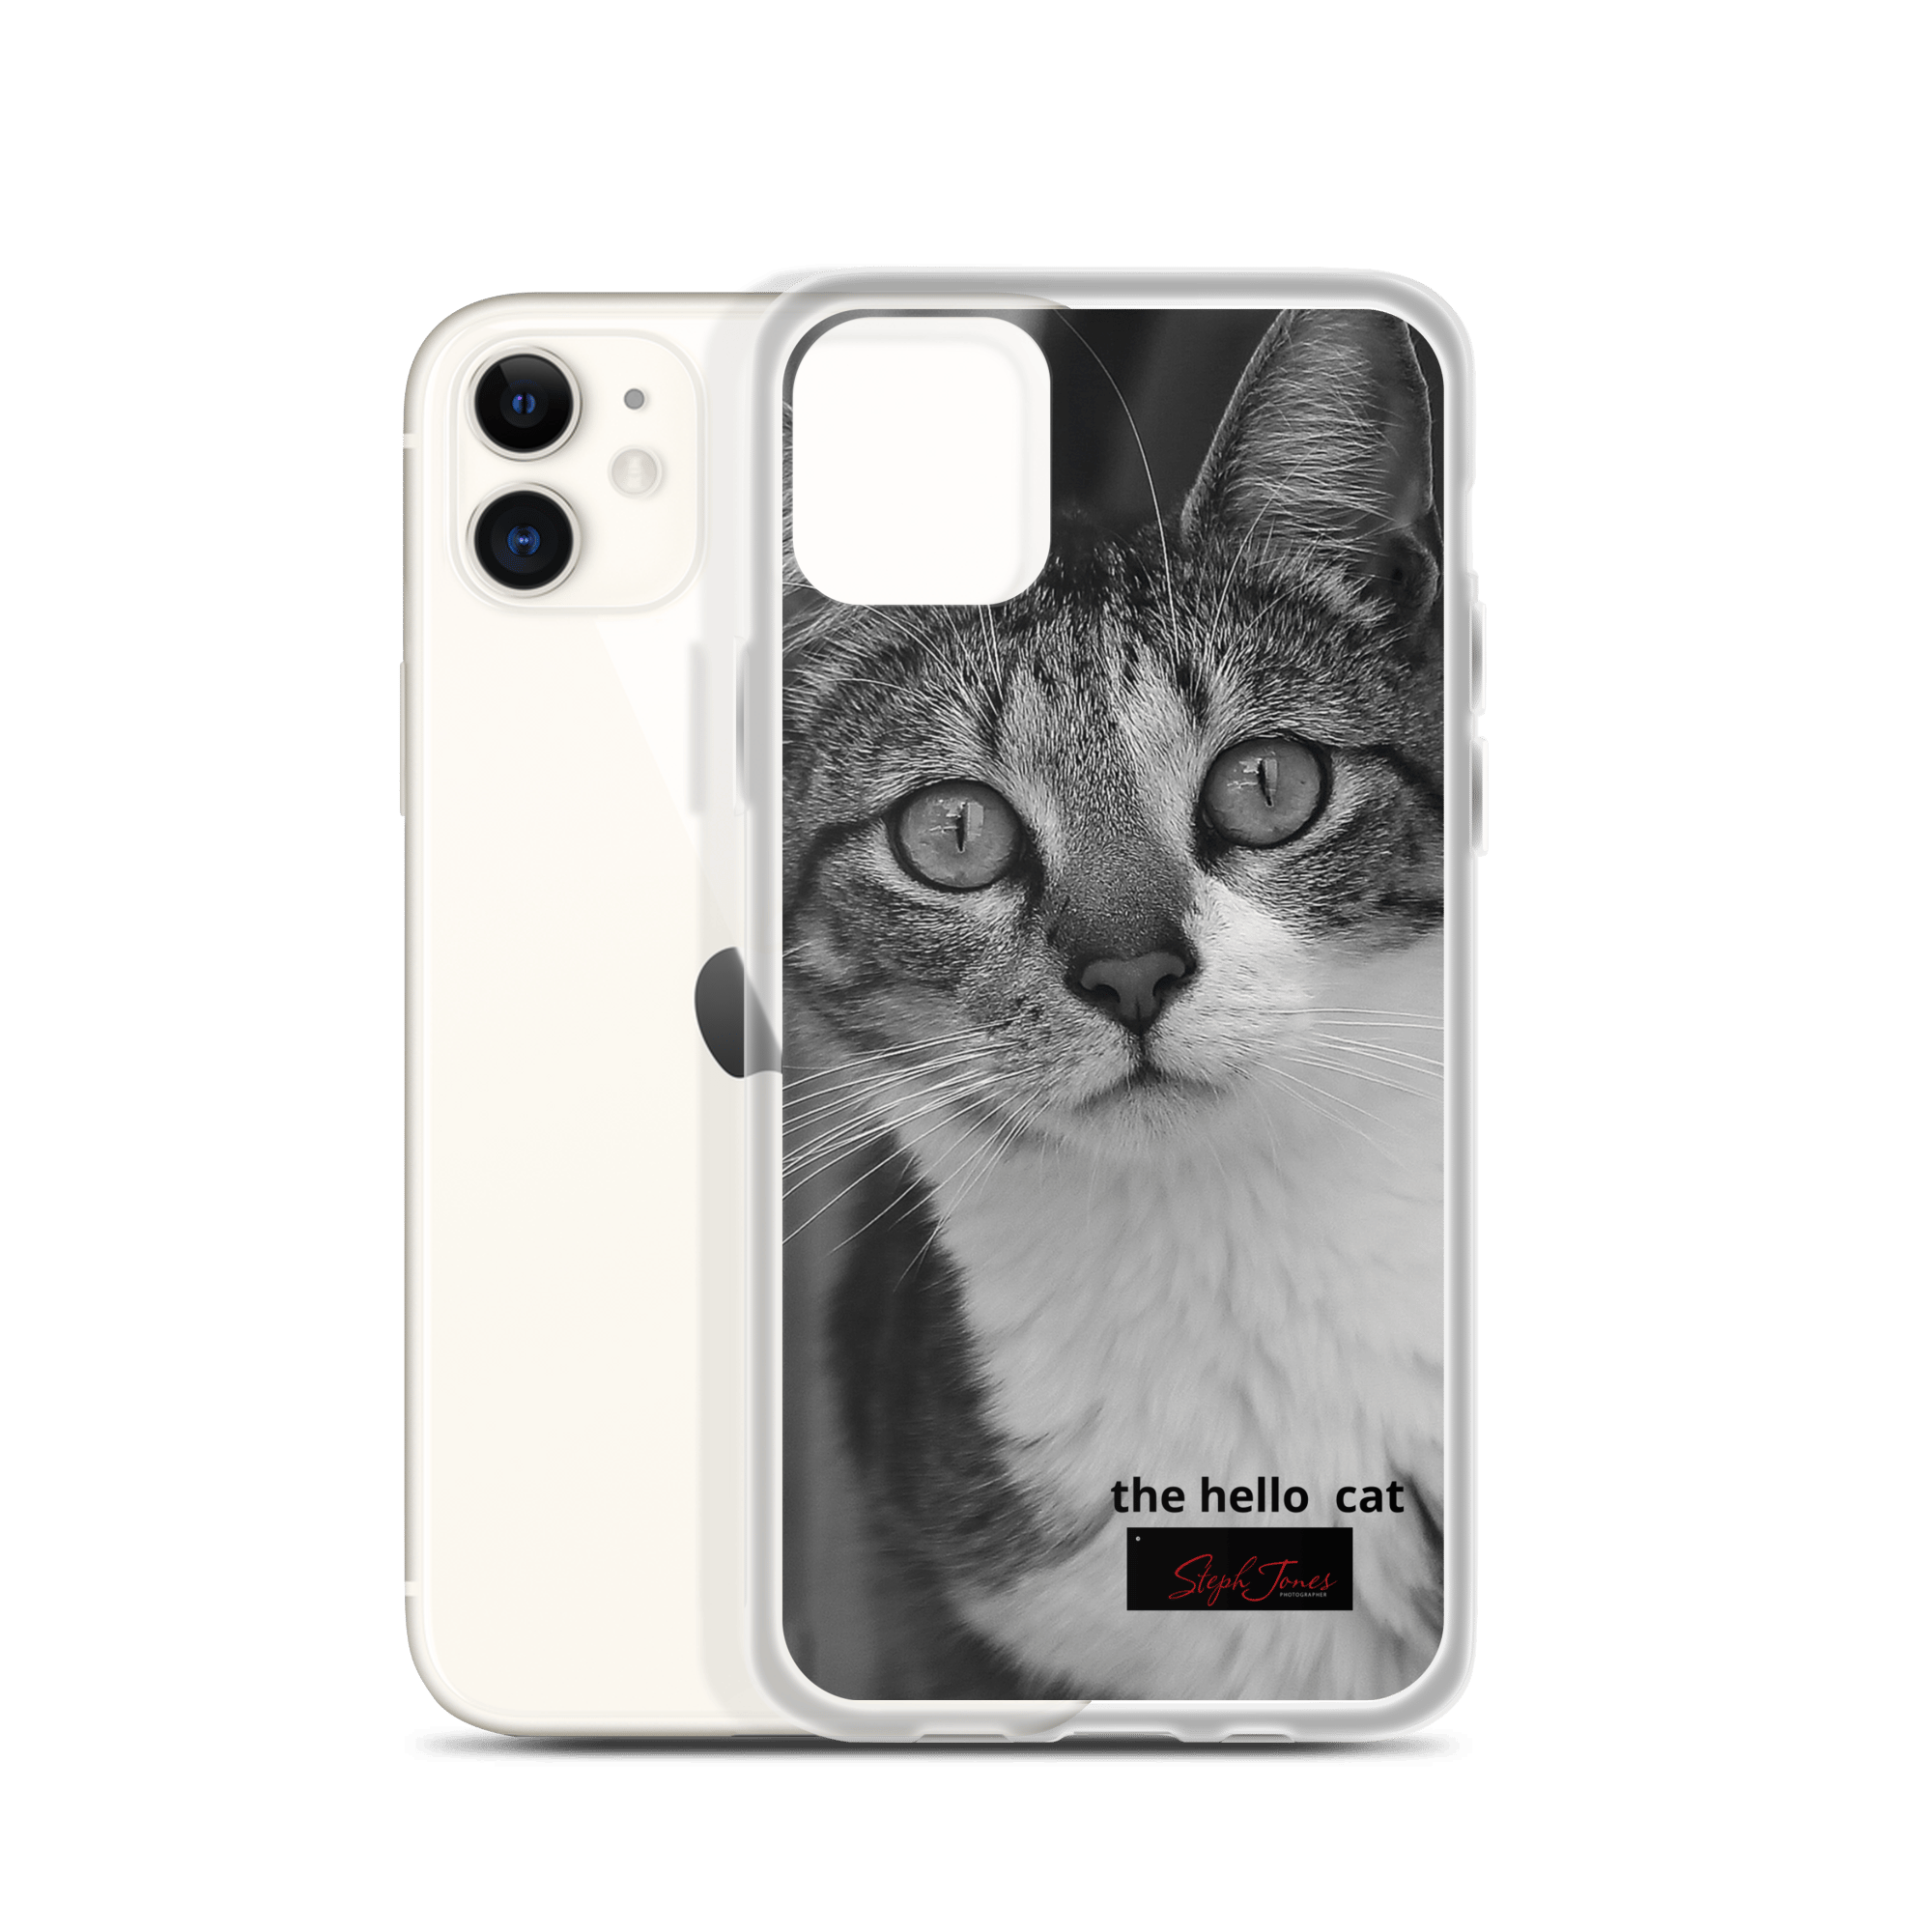 Image of iPhone Case. The Hello Cat. Steph Jones Pet Portrait Collection. 